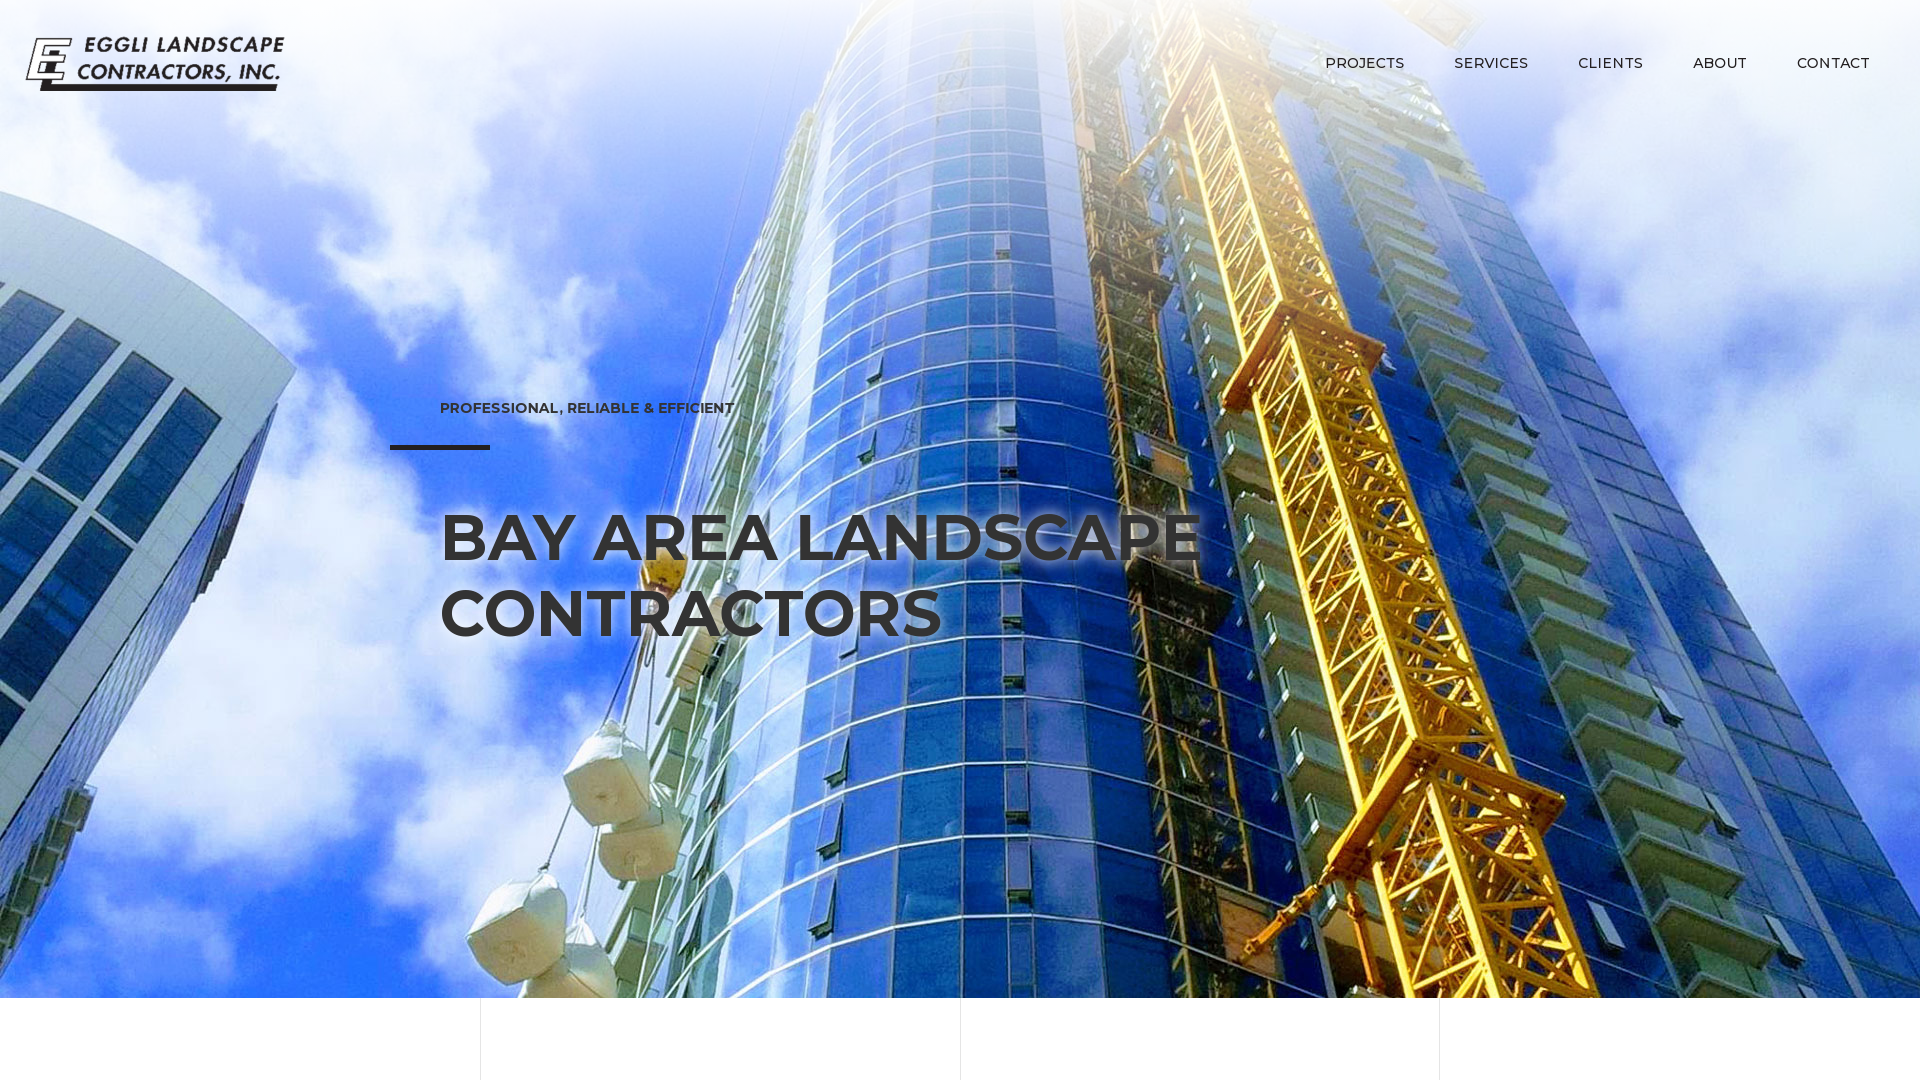 Eggli Landscape Contractors, Inc. _ Bay Area Landscaping